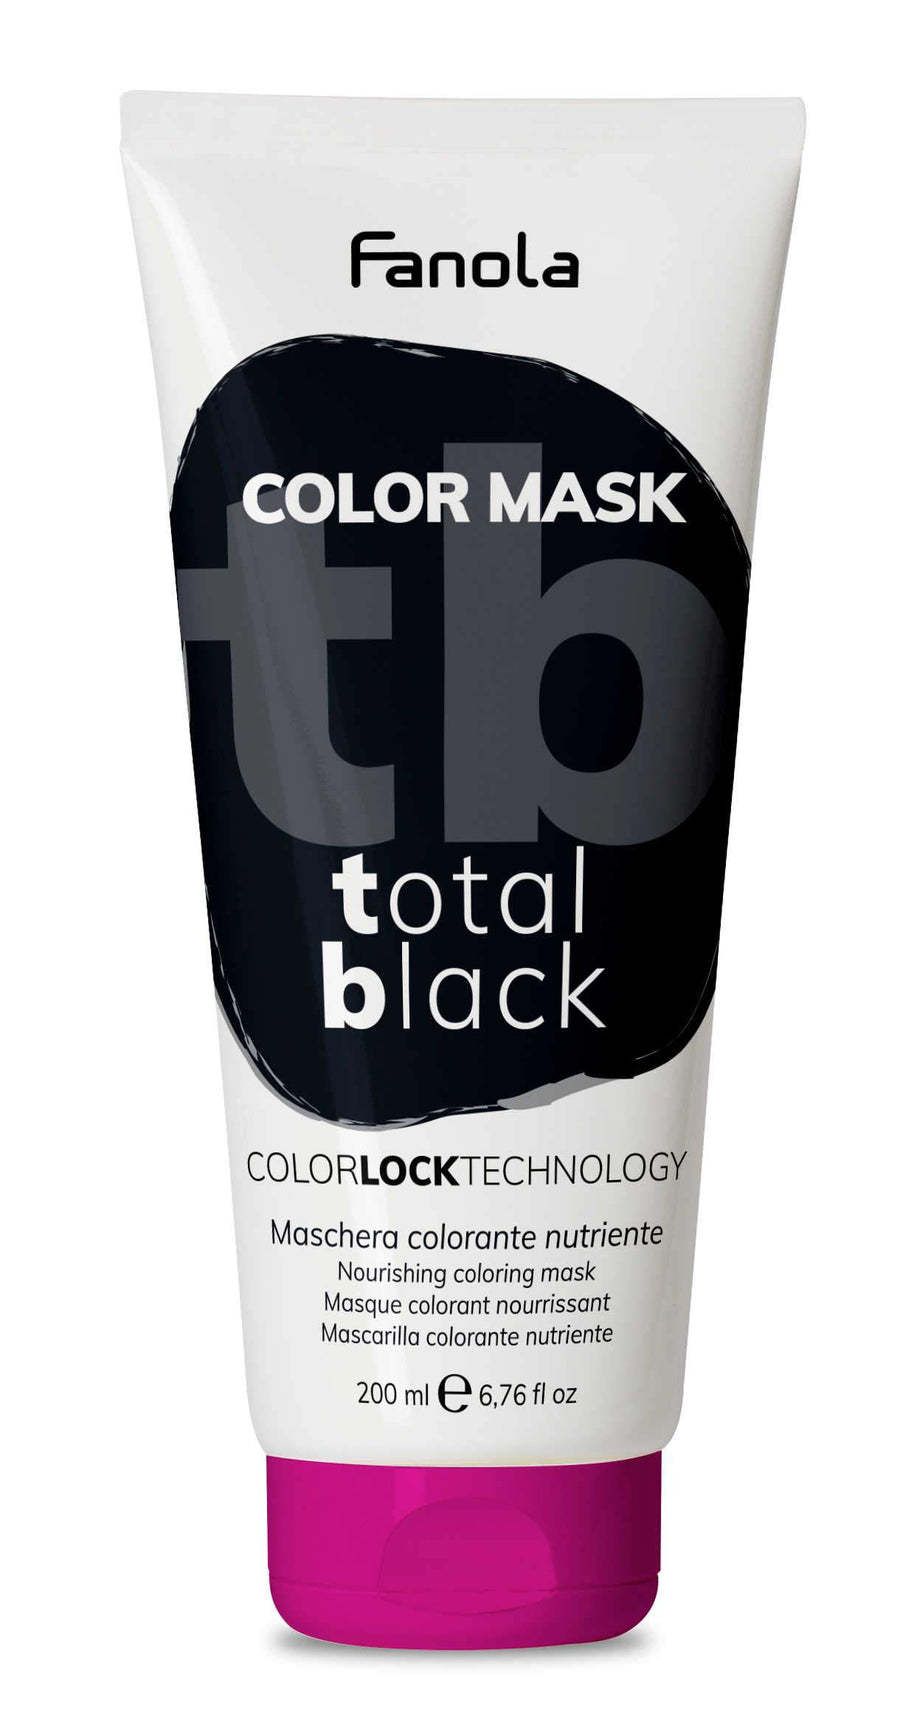 Fanola Color Mask, 200 ml Hair Treatments Fanola Total Black 